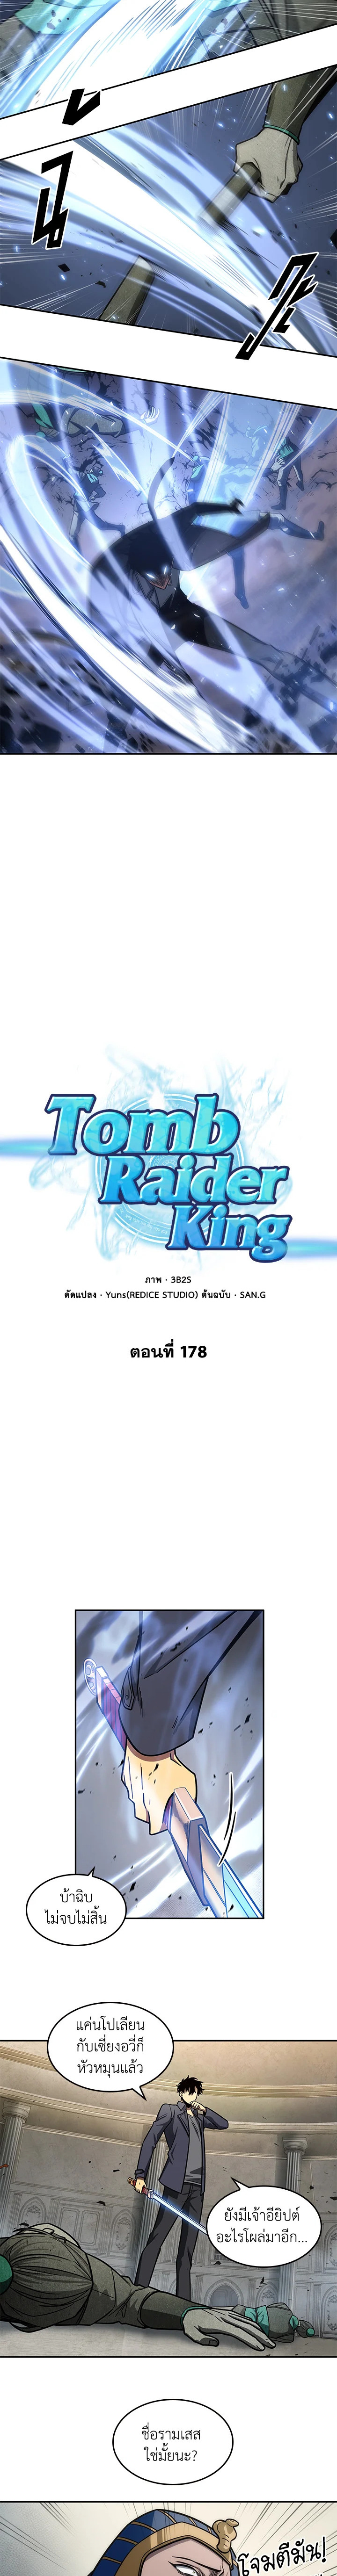 Tomb Raider King178 (2)